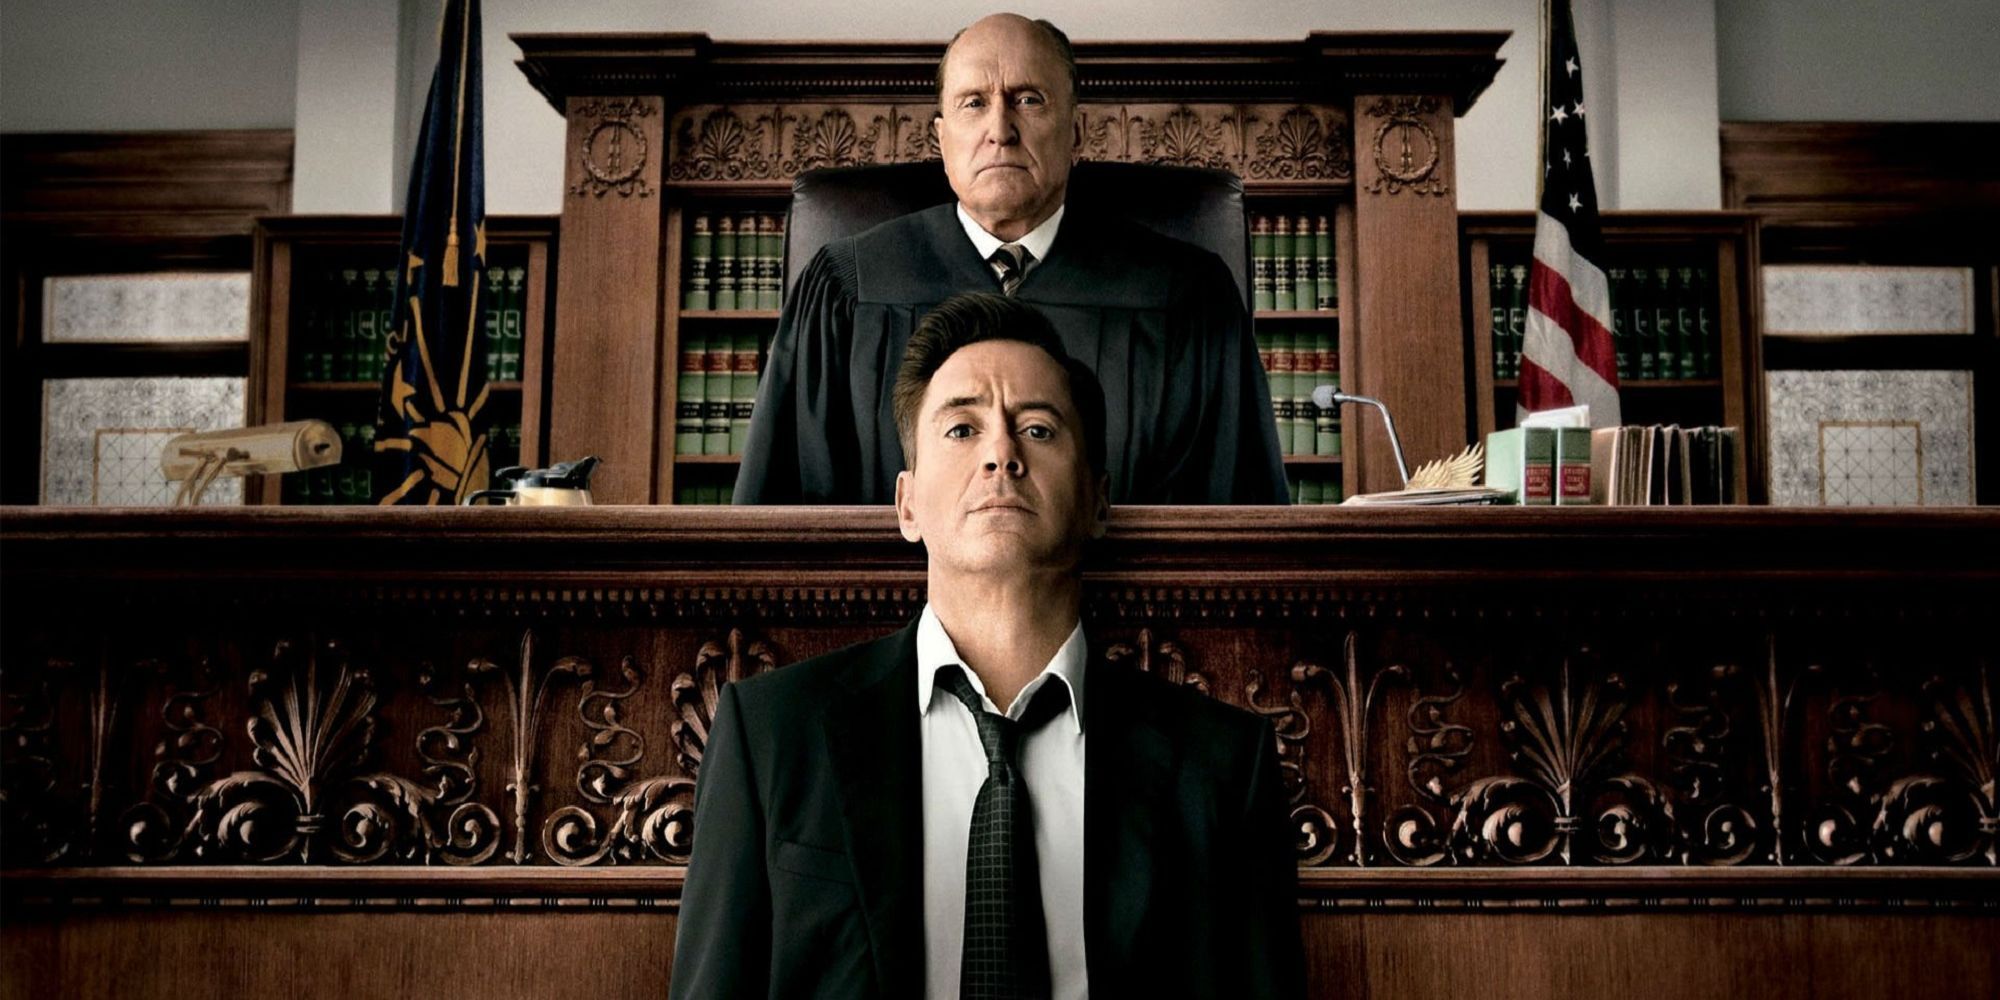 Robert Downey Jr. and Robert Duvall in The Judge